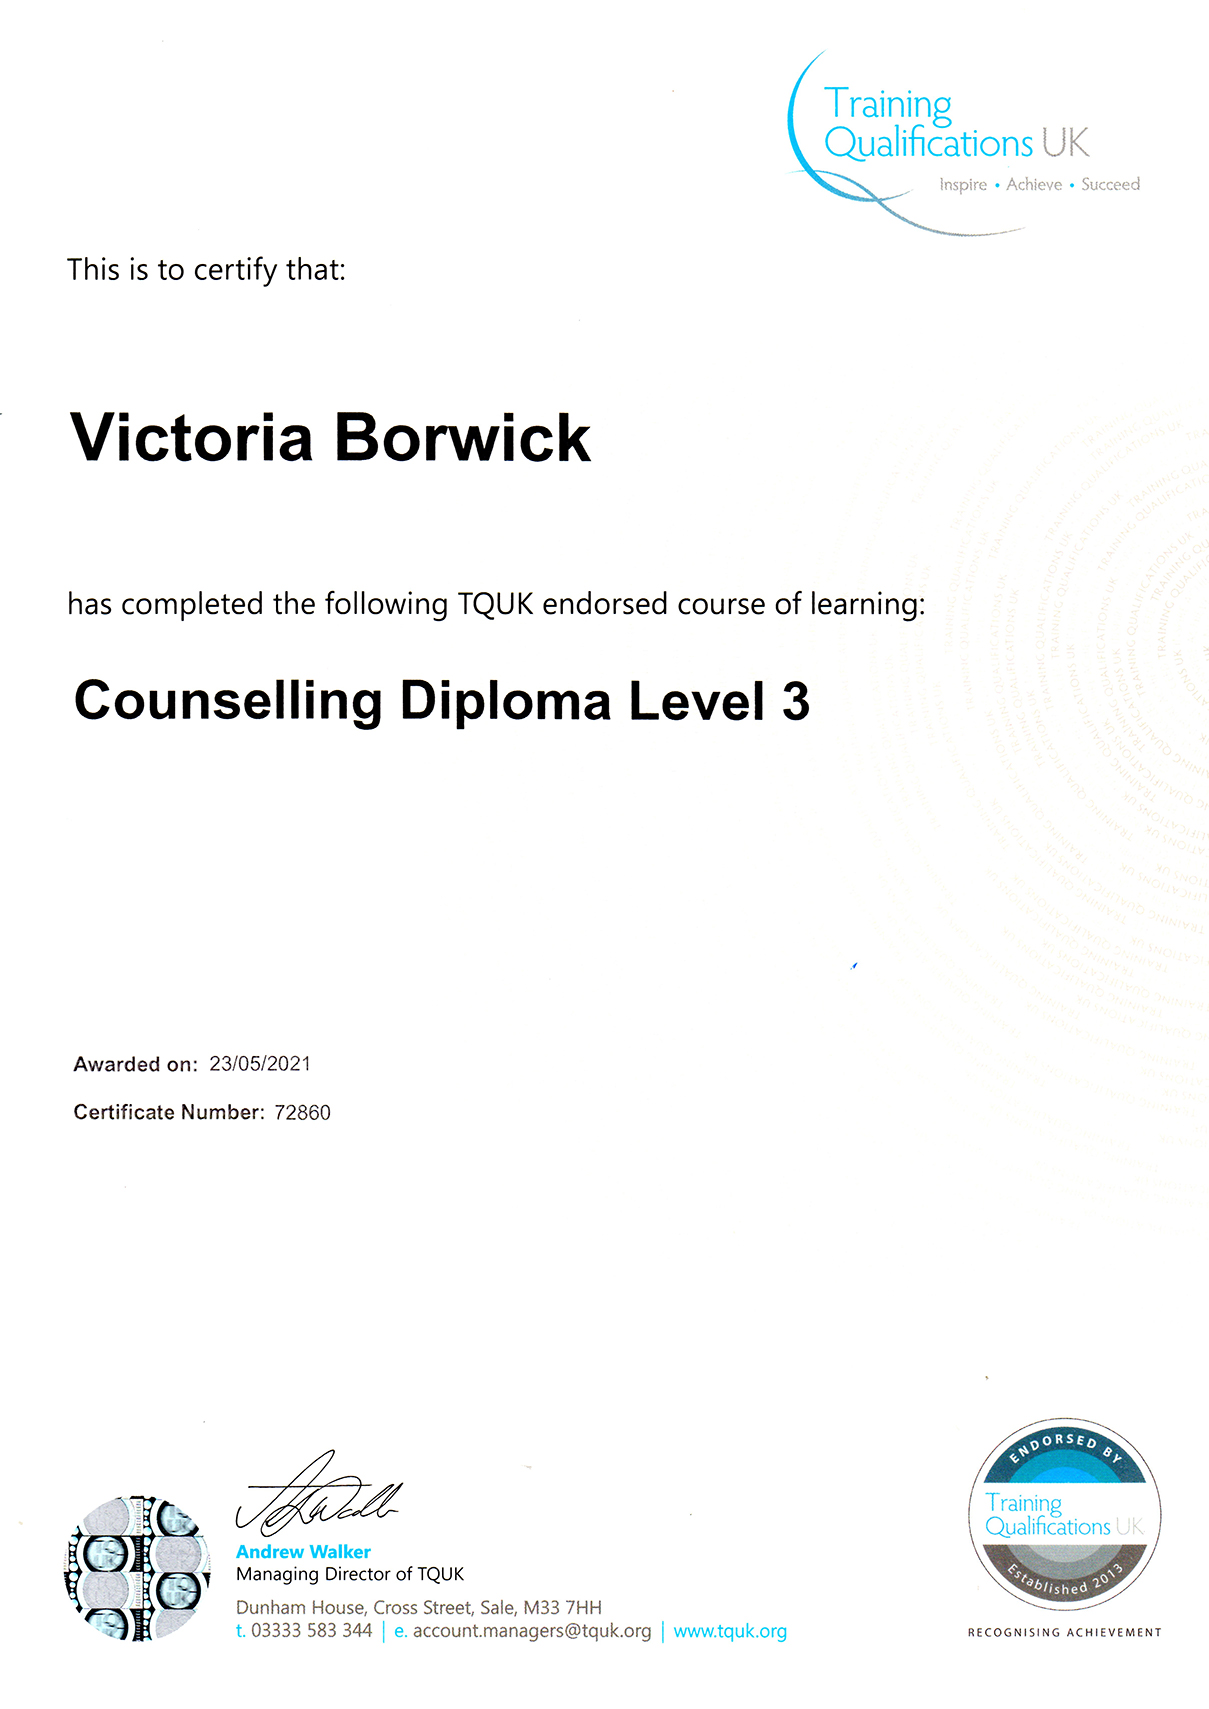 VB Counselling Diploma 1